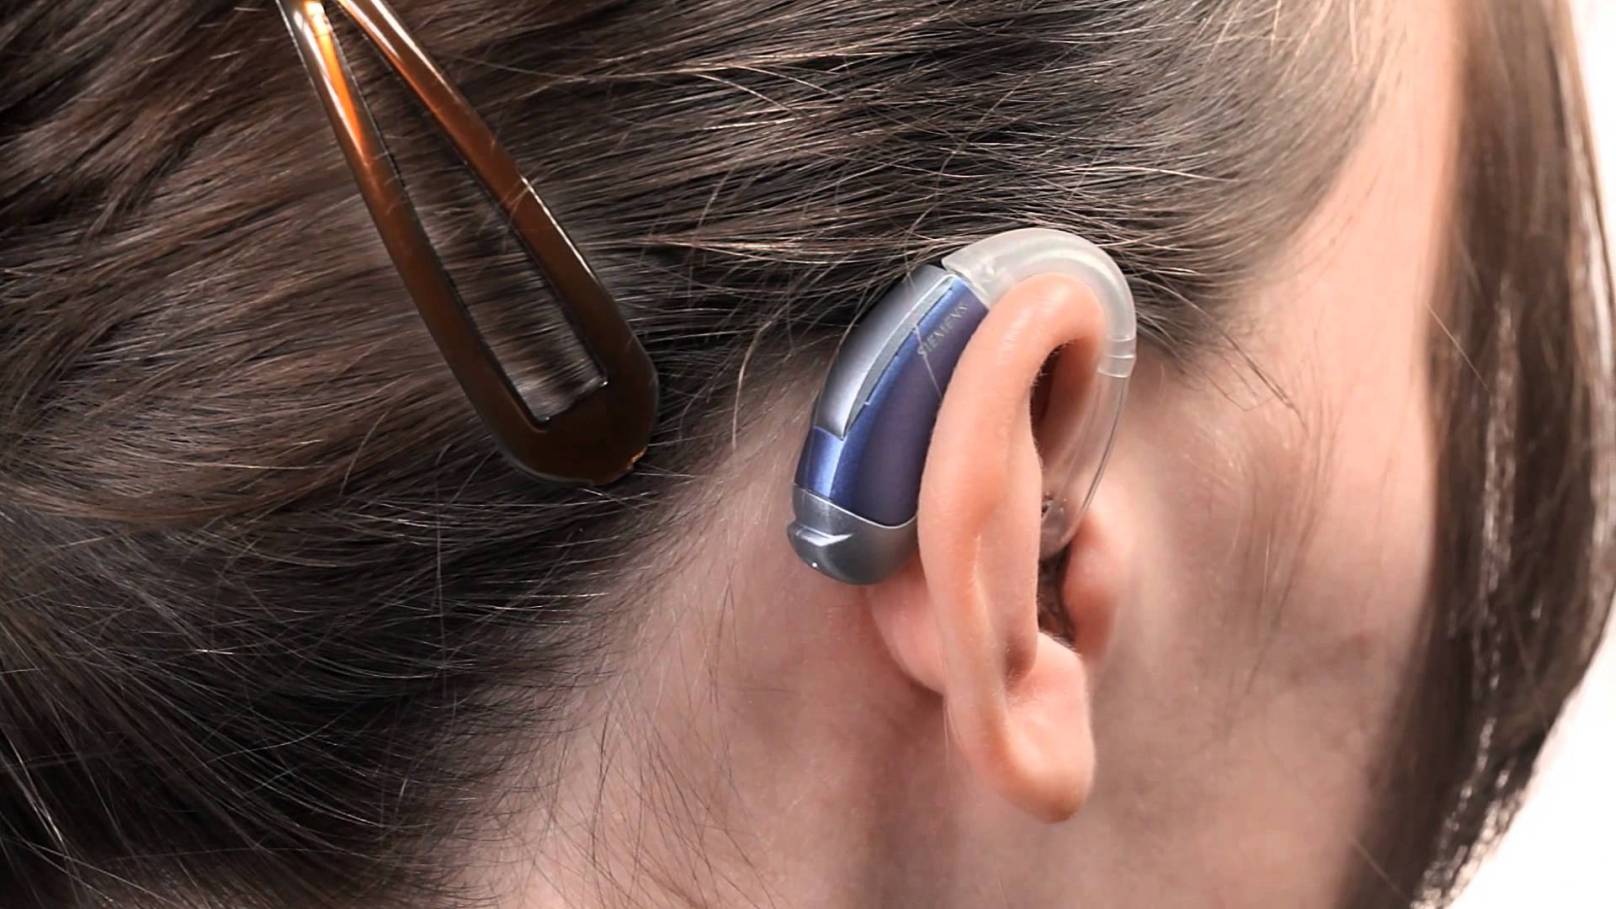 0 hearing. Заушные слуховые аппараты (BTE). Слуховой аппарат Нео классика 675p. Слуховой аппарат цифровой заушный мощный. Audifon слуховые аппараты.